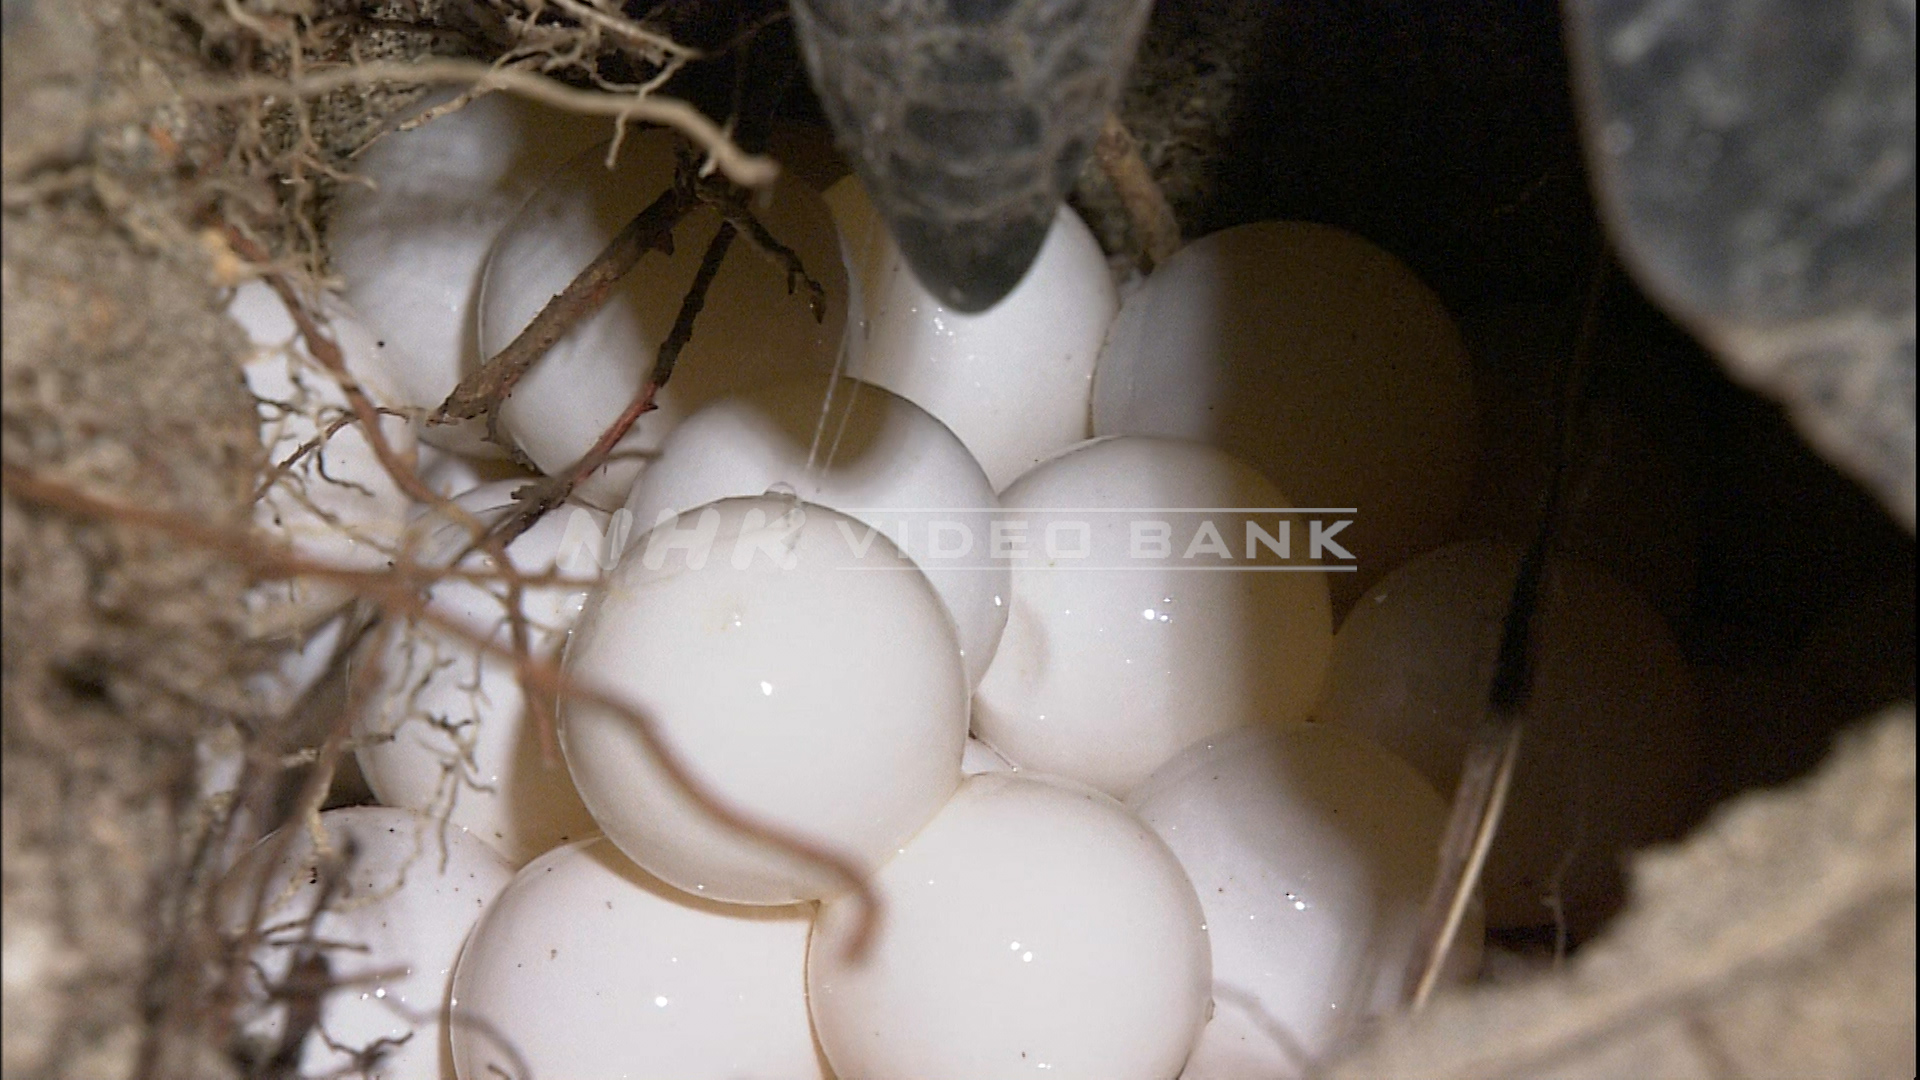 Wonders of nature: sea turtle returns home to lay eggs